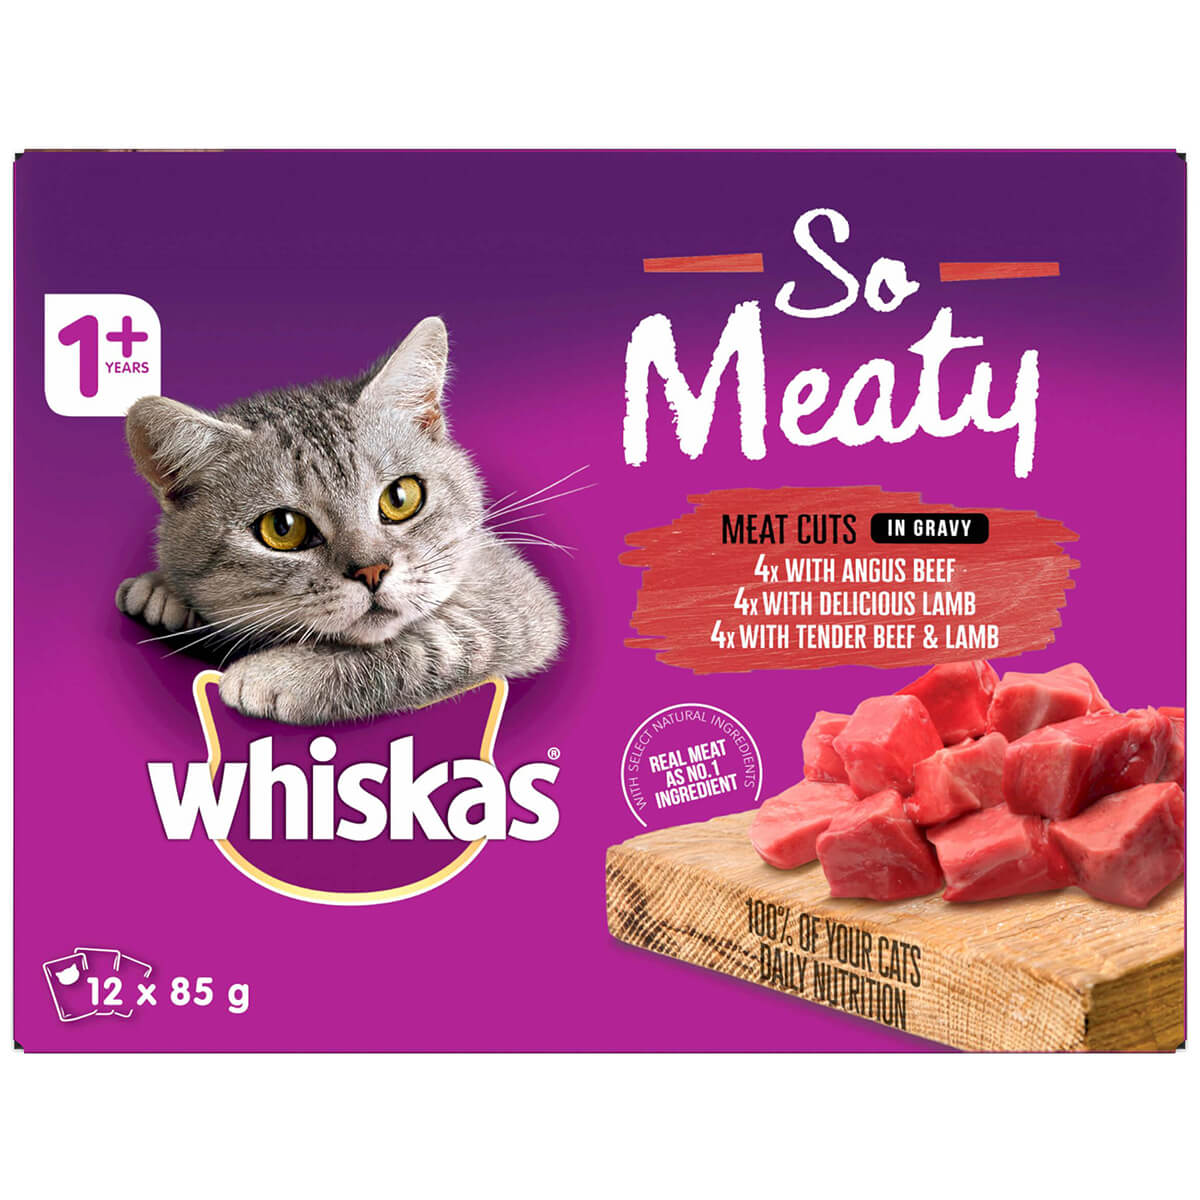 Whiskas Adult So Meaty Meat Cuts Gravy Wet Cat Food 12 x 85g